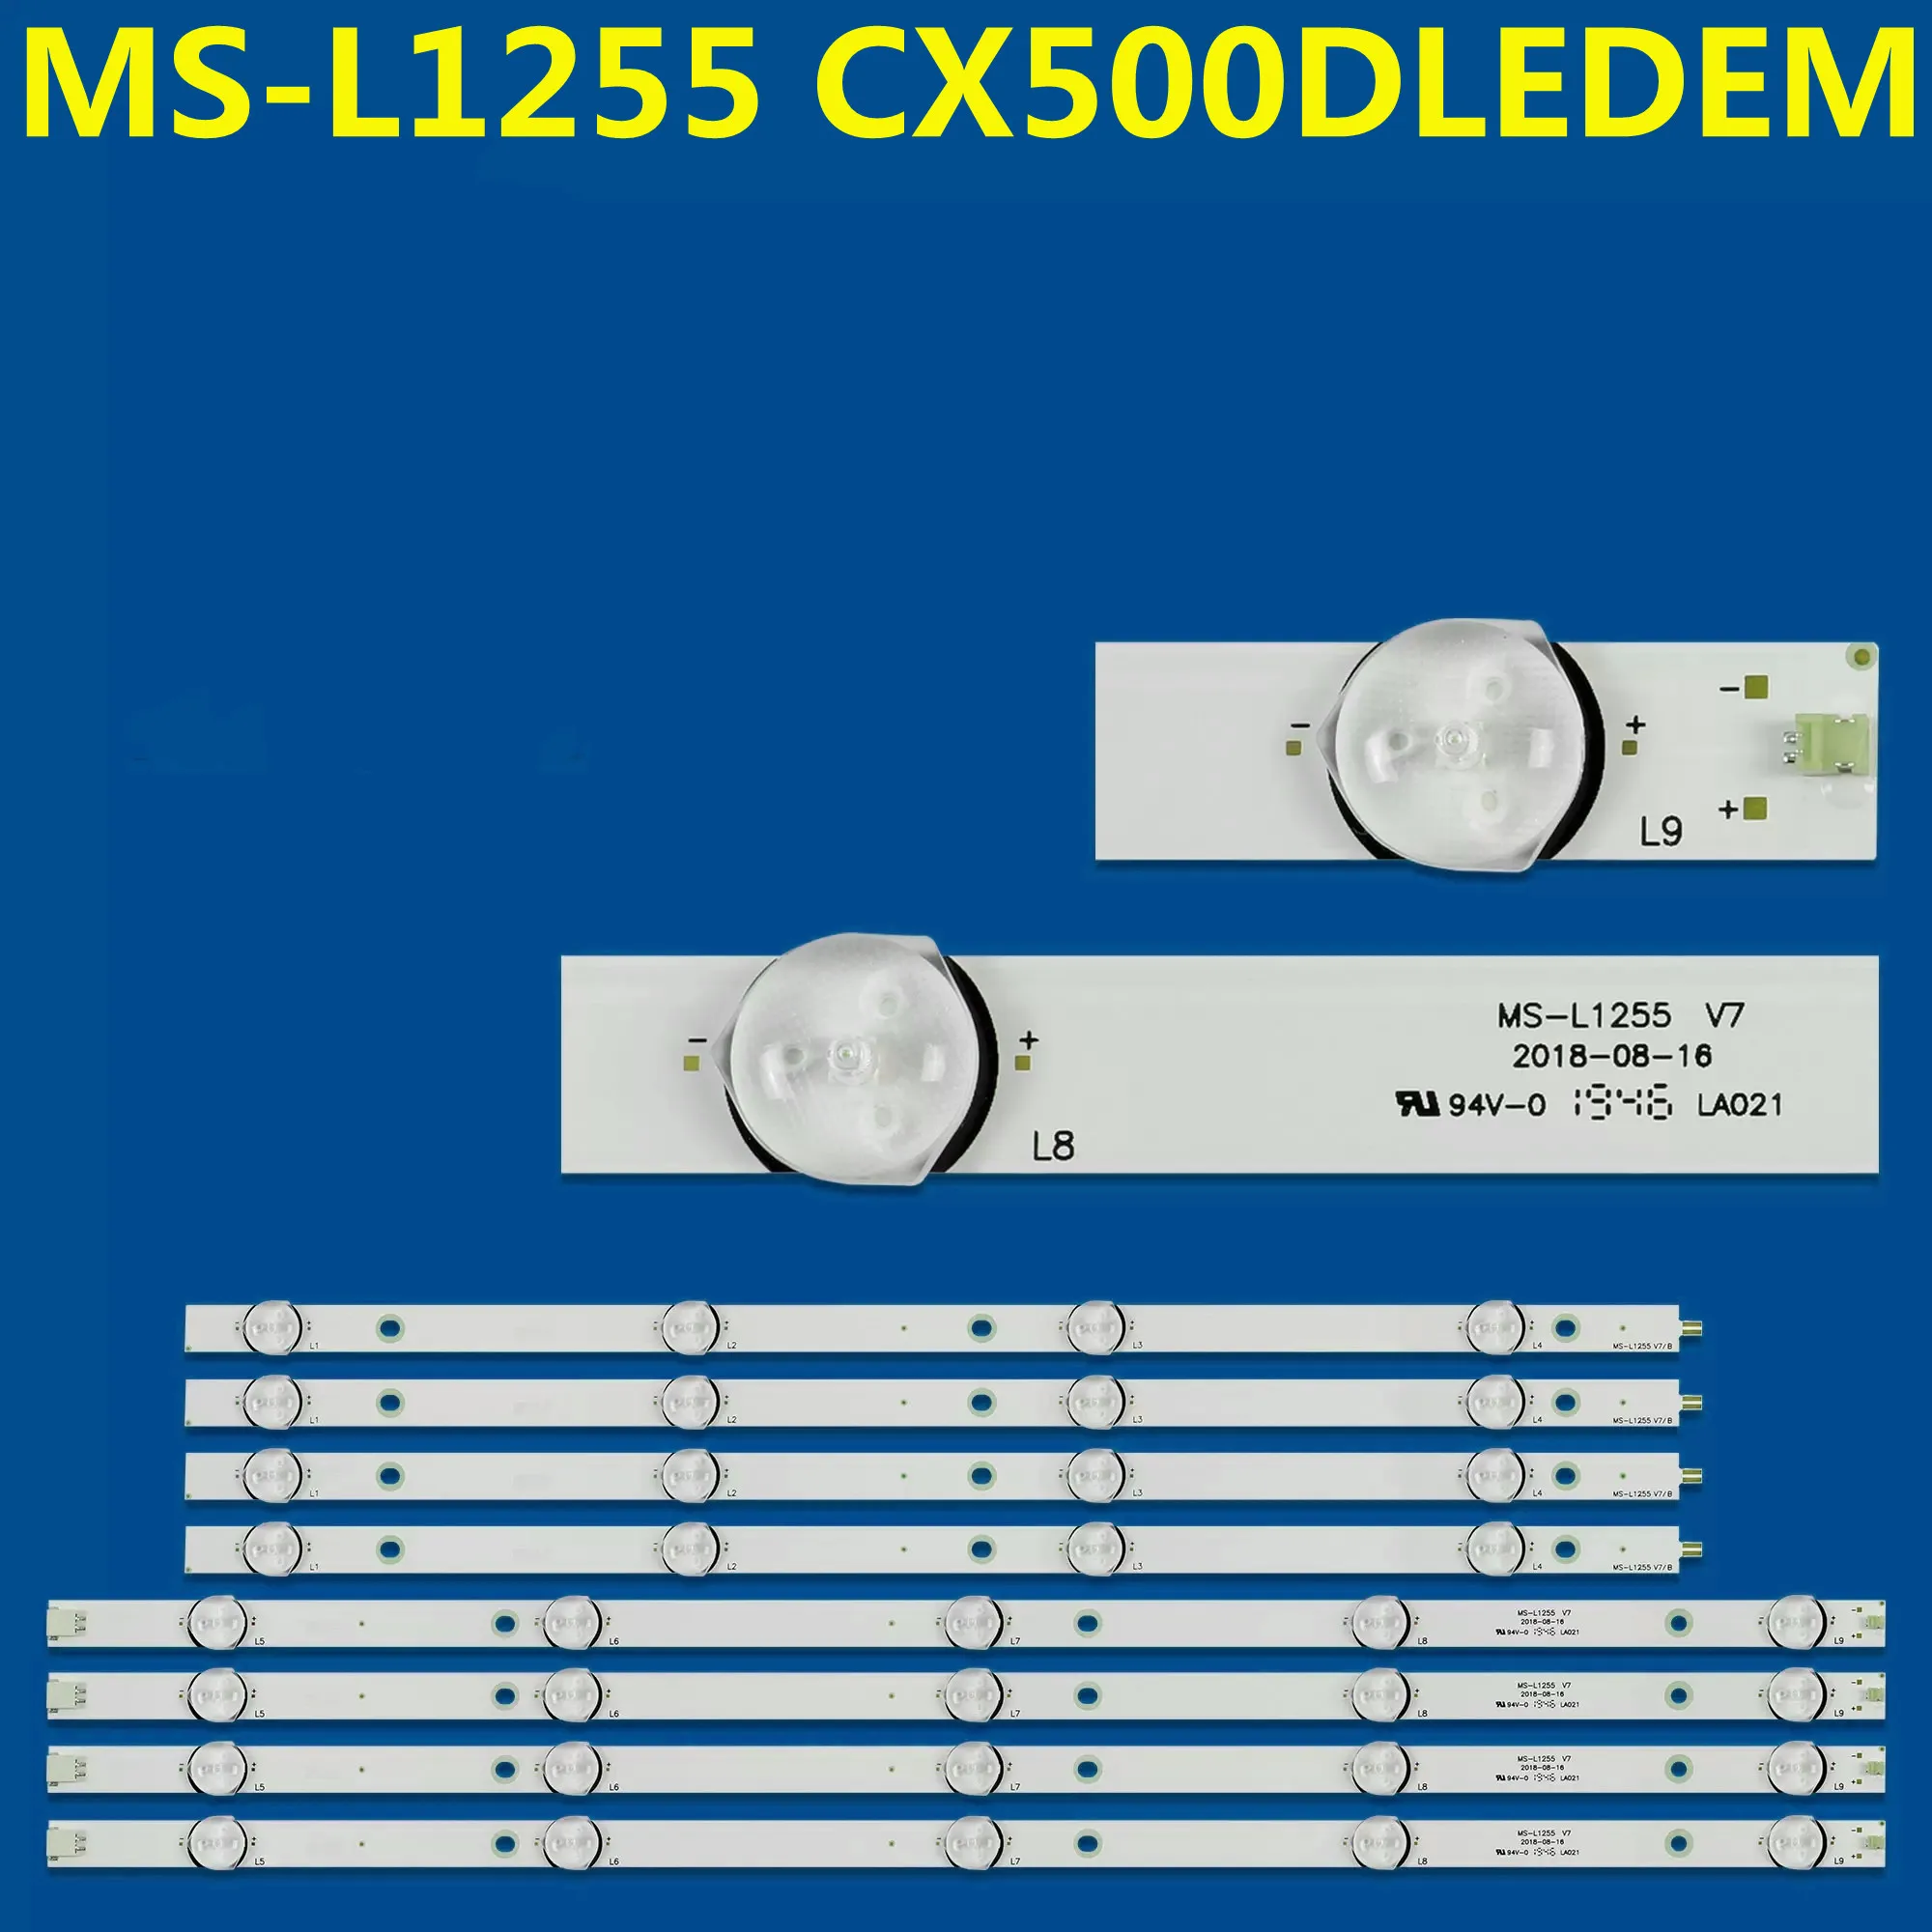 

LED Strip For CT-8250 UHD K50DLX9US PU50S7X MS-L1255 CX500DLEDEM HL-00500A30-0901S-04 50LEM-1027/FTS2C 1070 50SUA2505 50SU1505